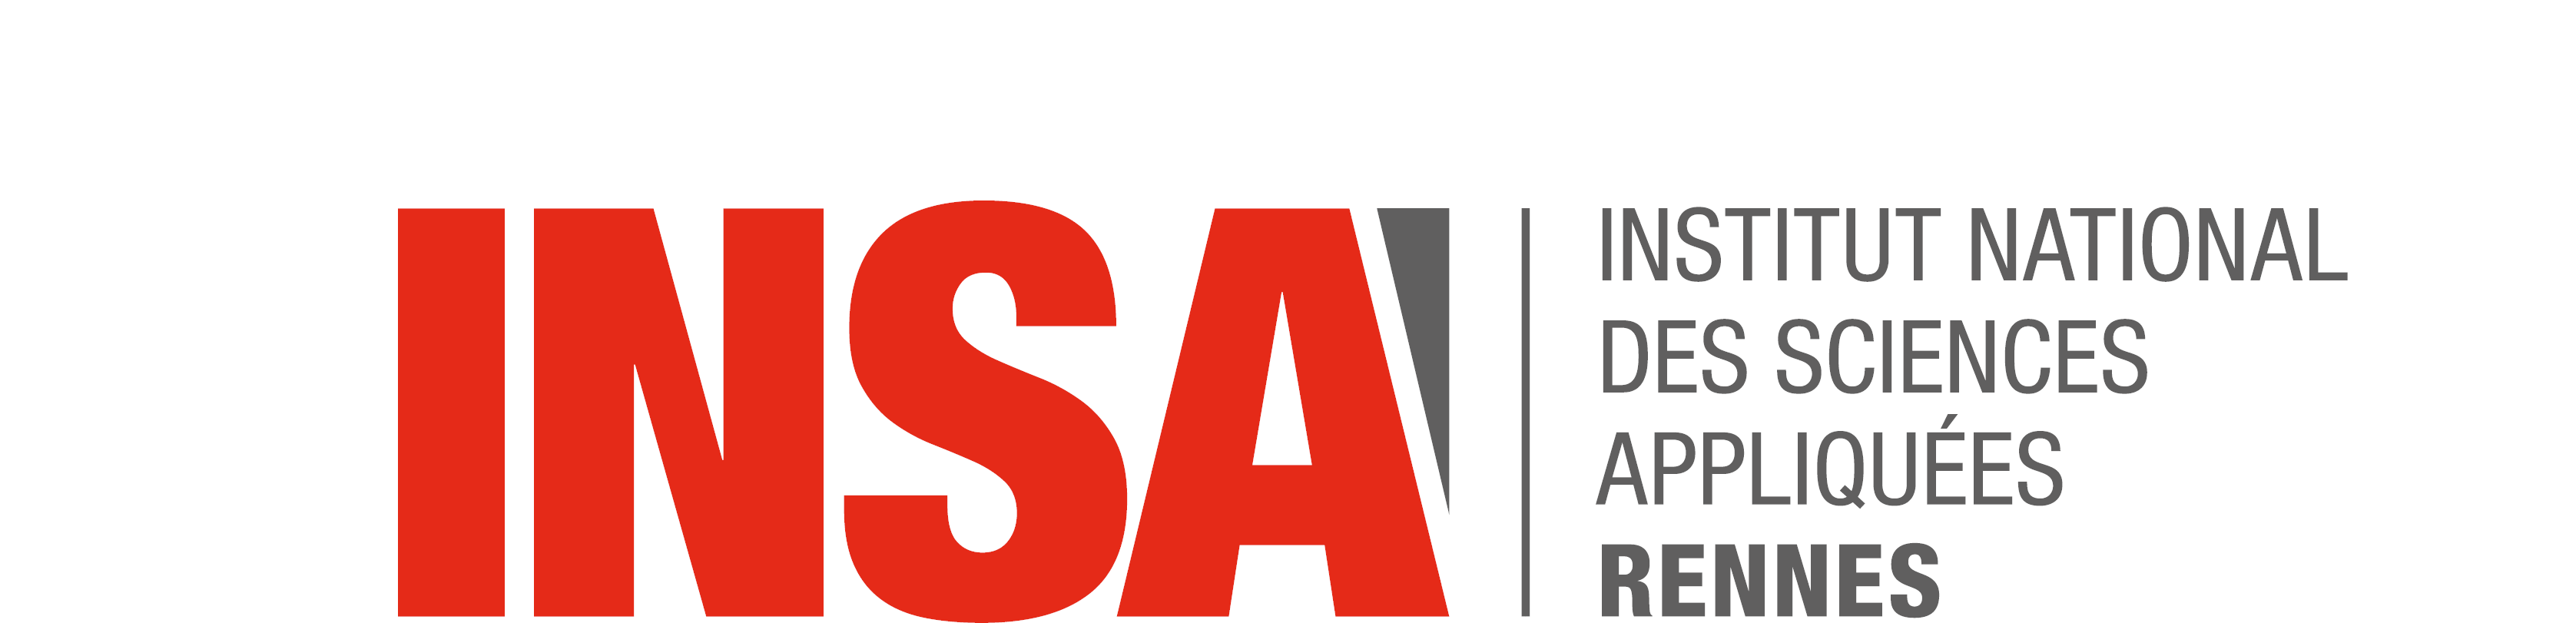 INSA_logo